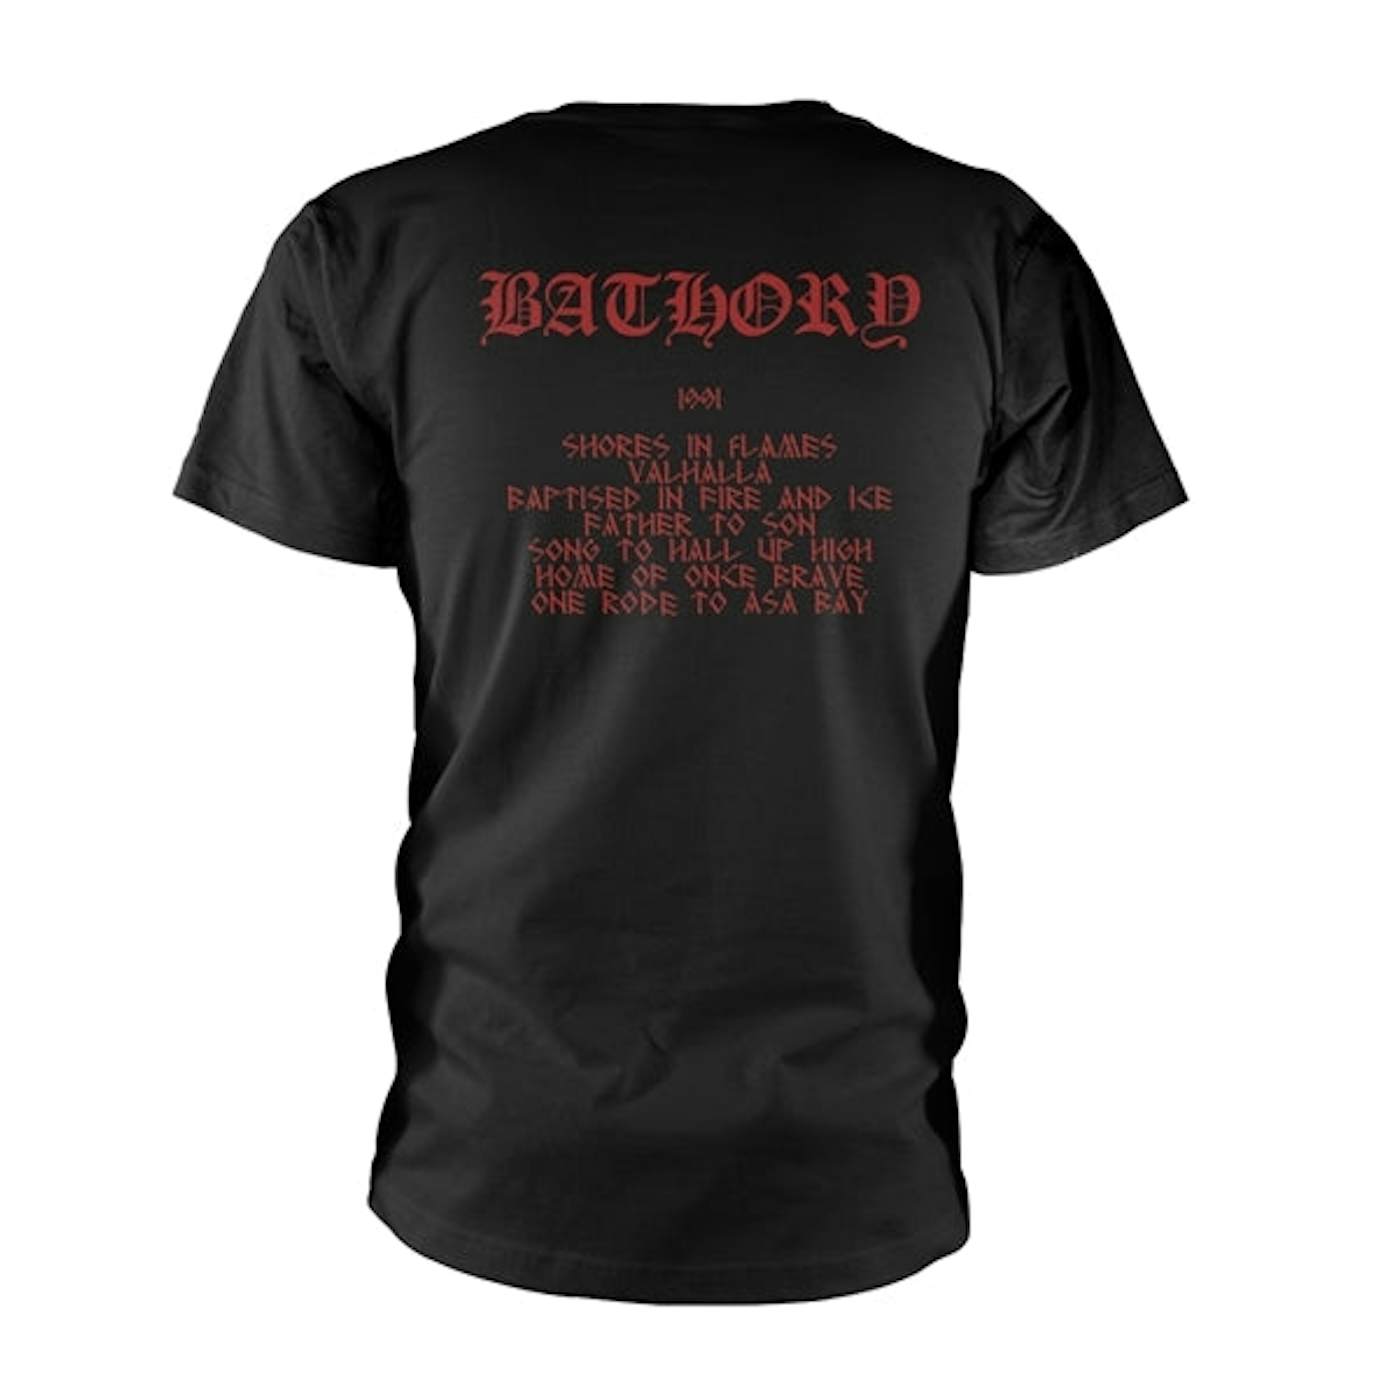 Bathory T-Shirt - Hammerheart